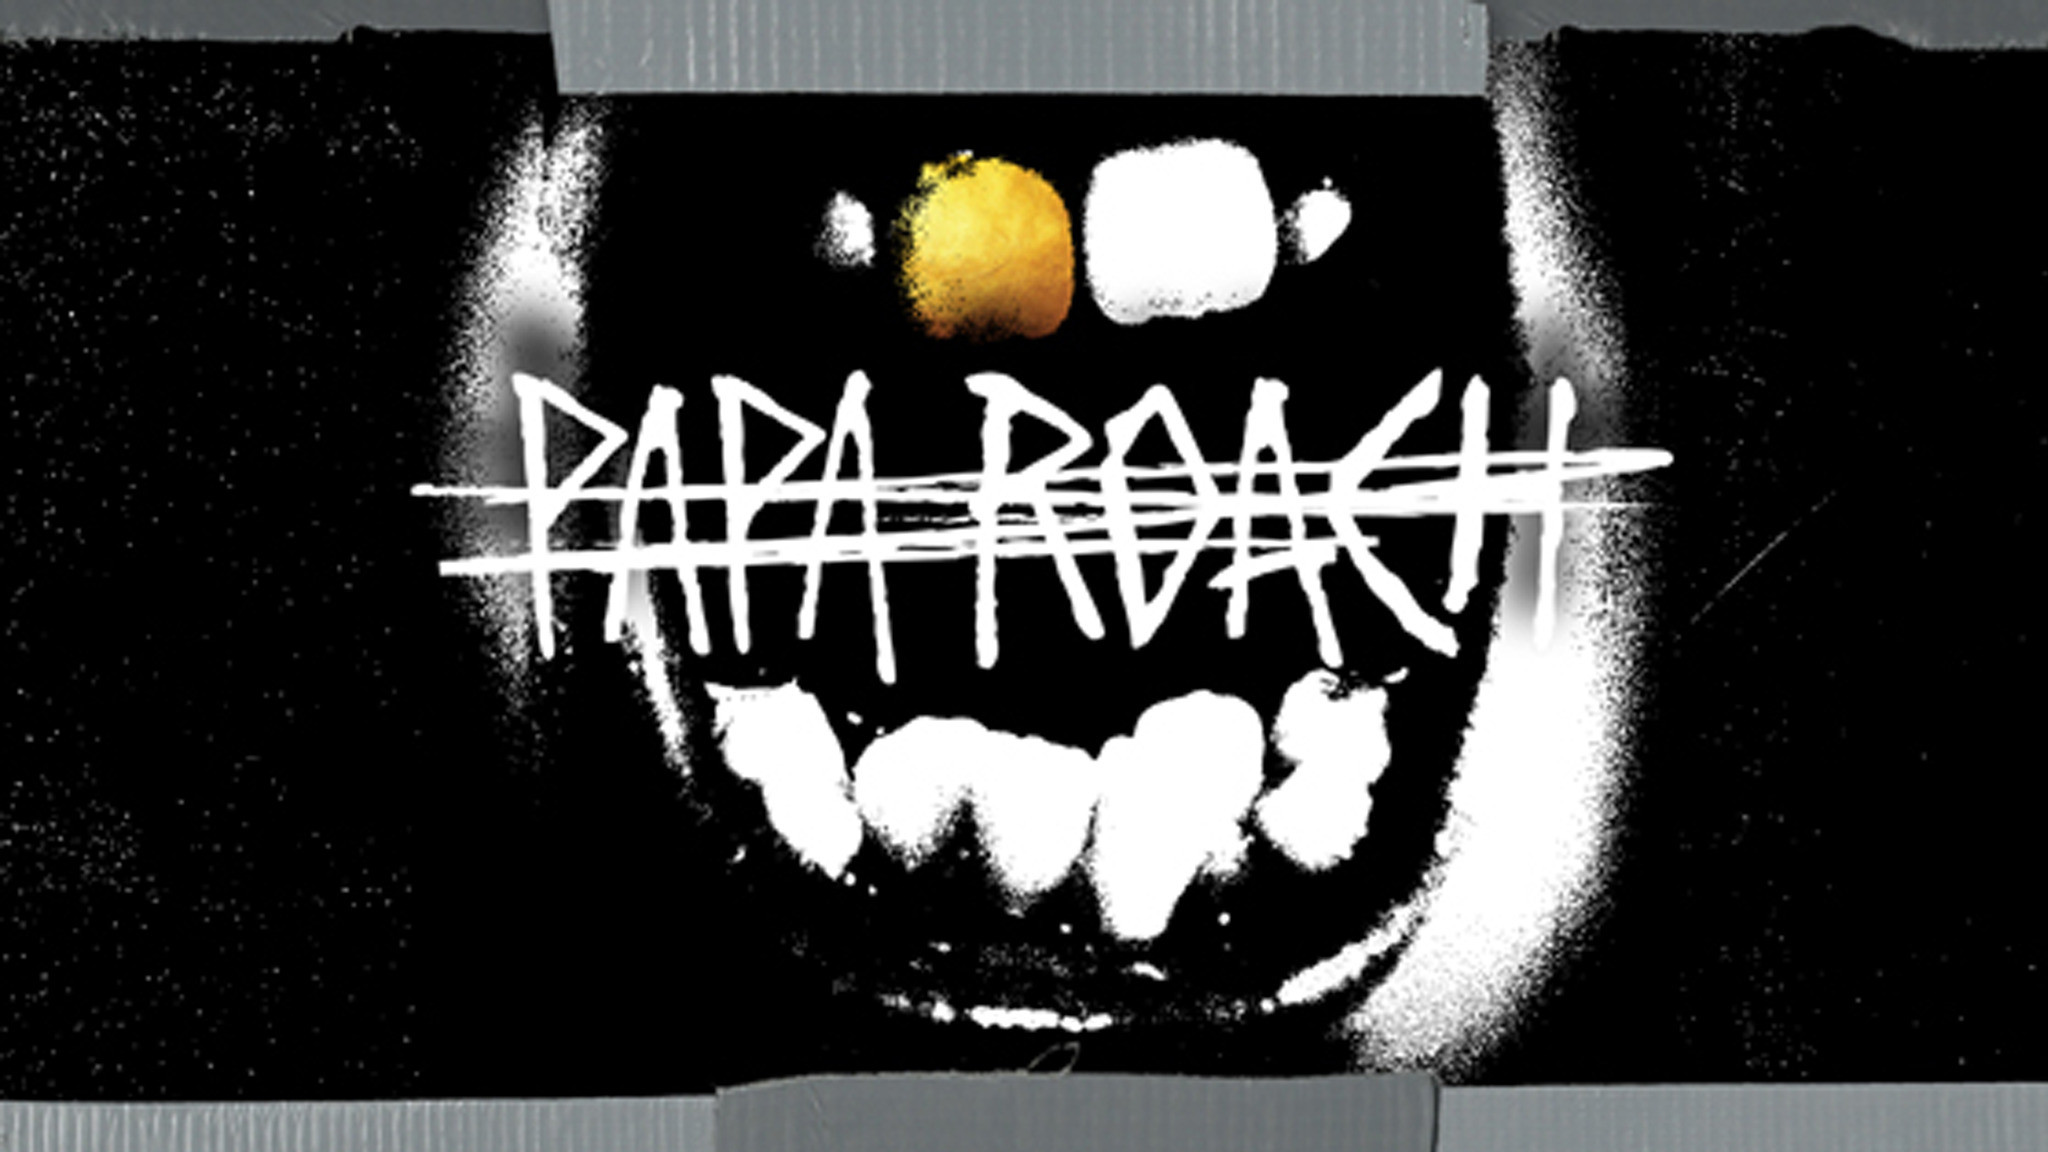 2048x1152 Papa Roach in Concert: American nu-metal band